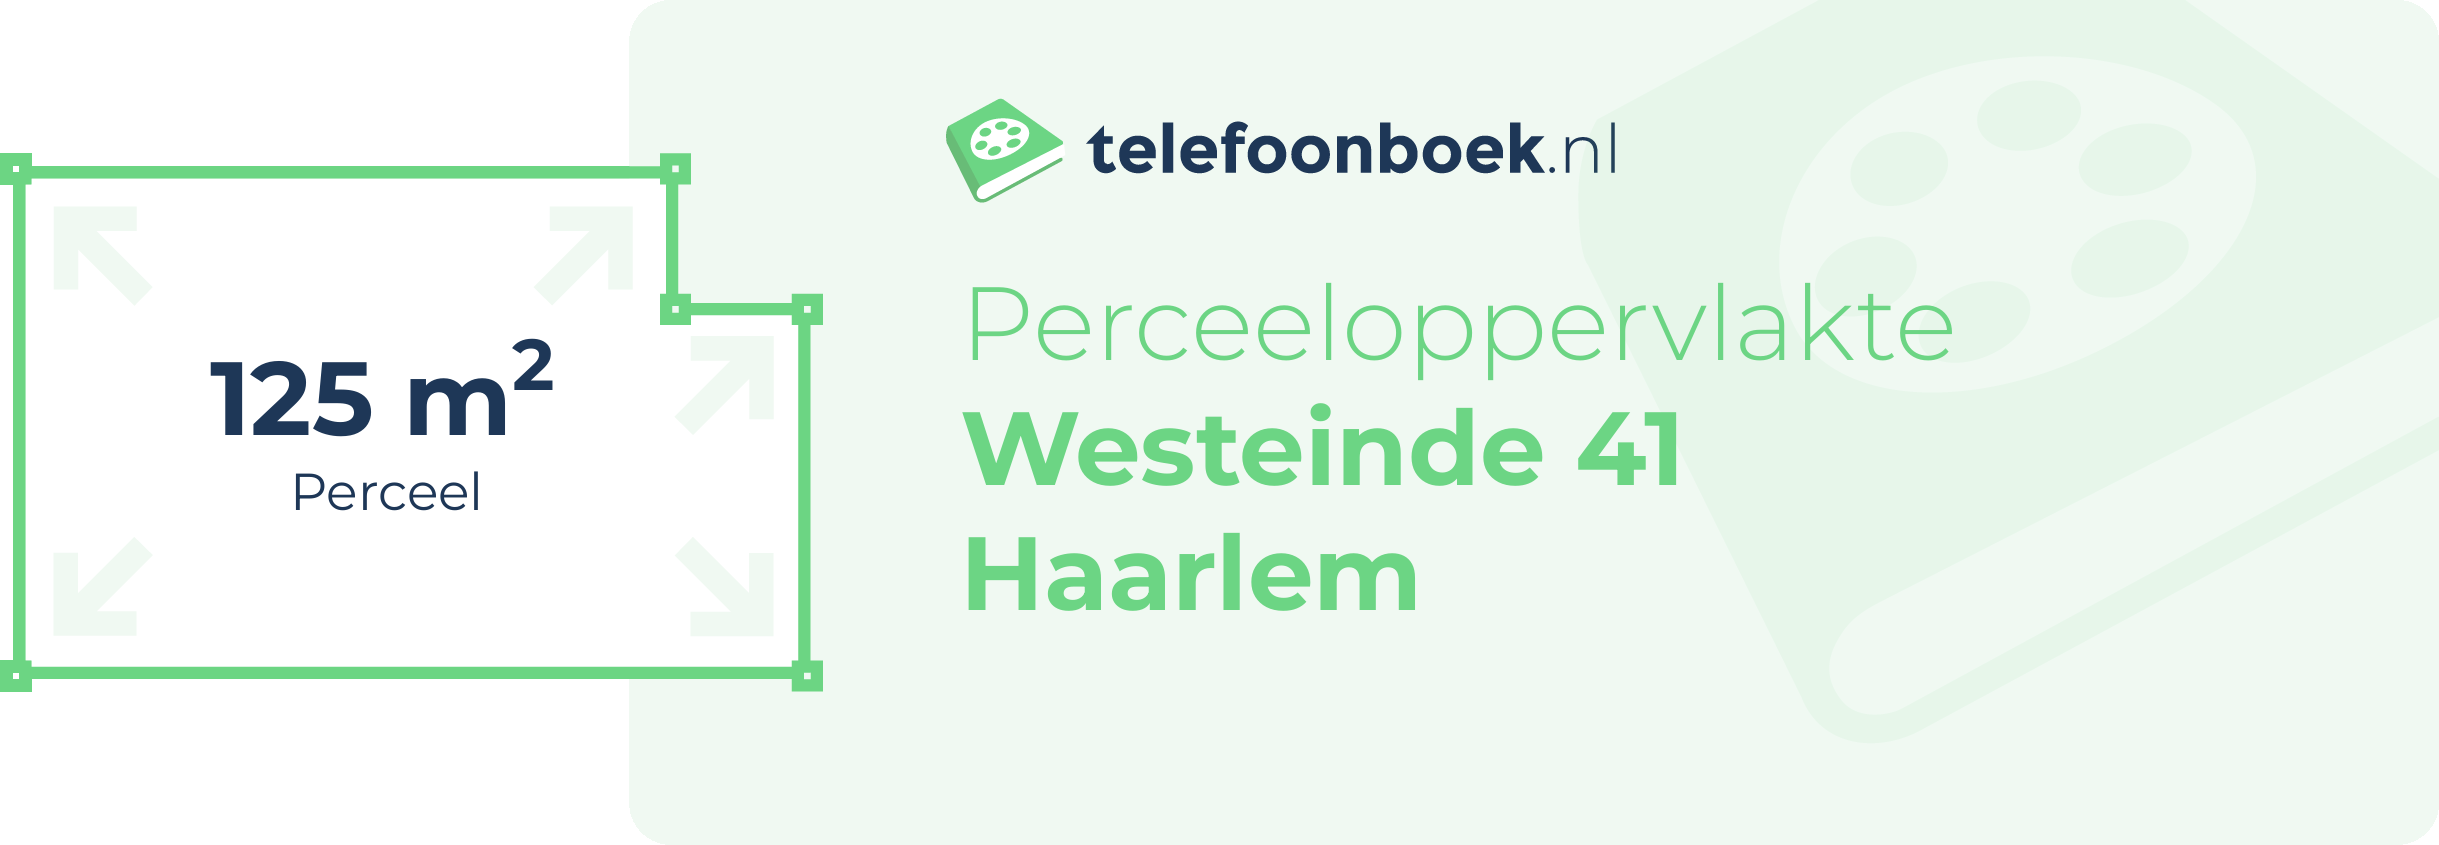 Perceeloppervlakte Westeinde 41 Haarlem